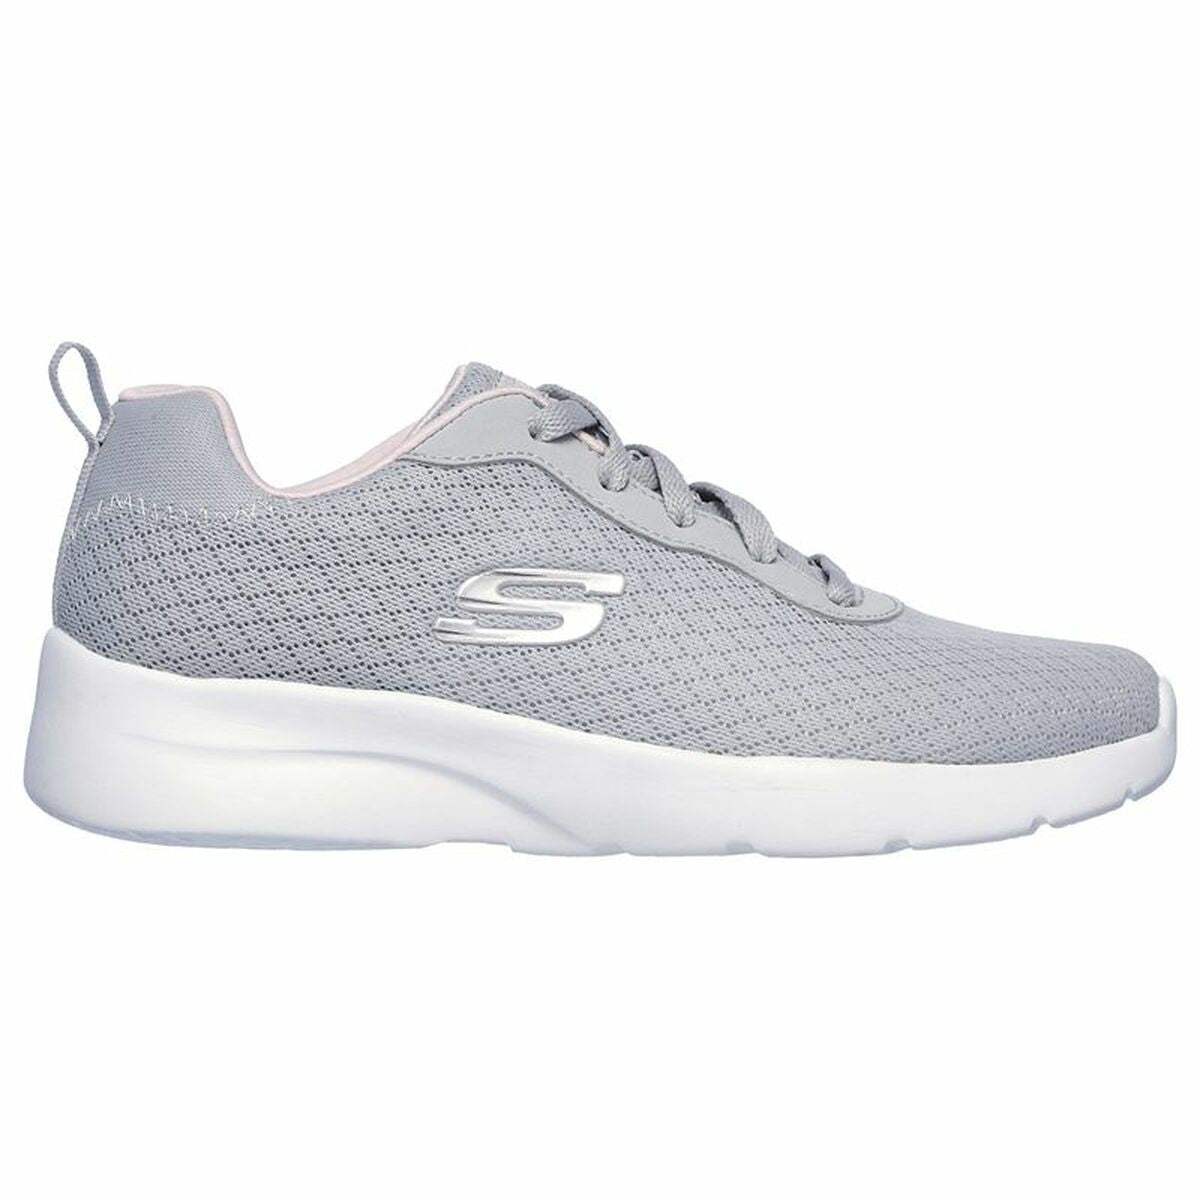 Chaussures de sport pour femme Skechers Dynamight 2.0 - Eye To Gris clair - Skechers - Jardin D'Eyden - jardindeyden.fr